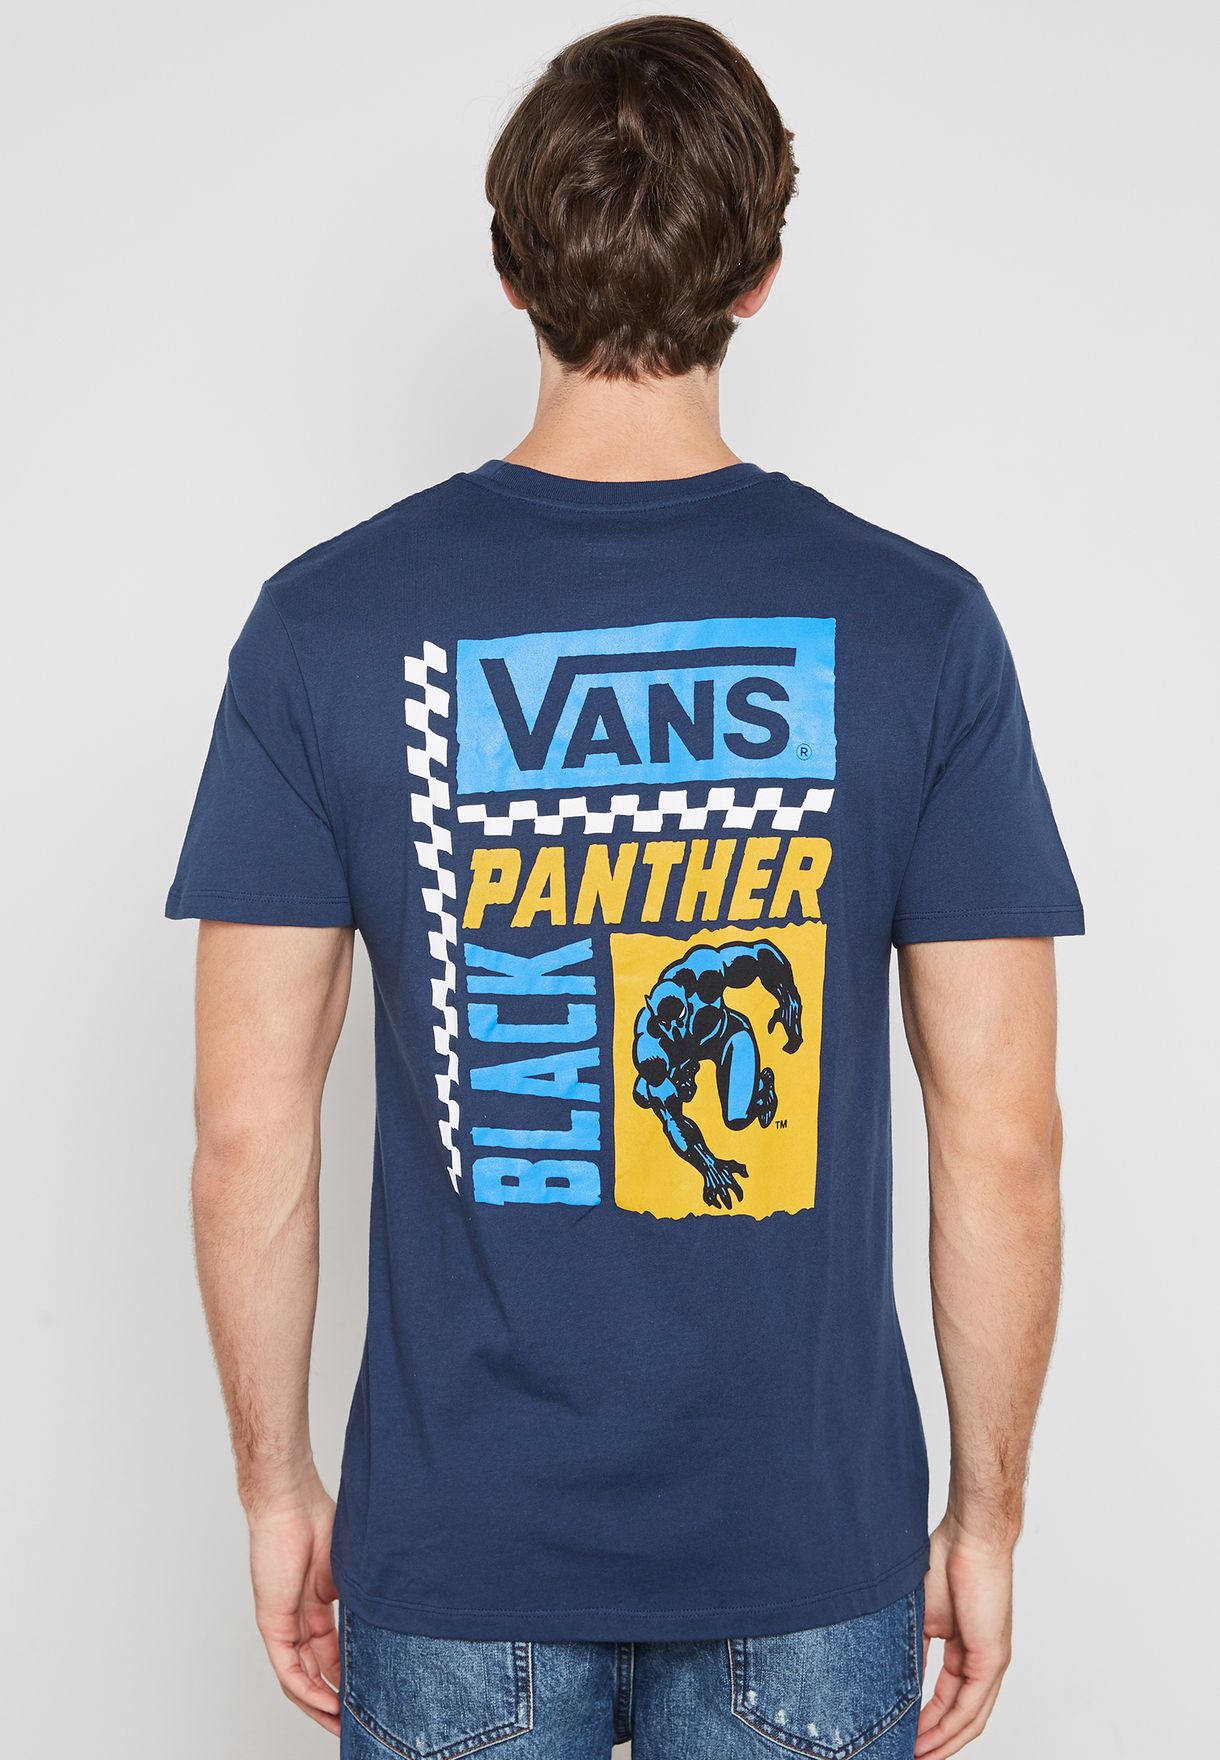 vans black panther shirt